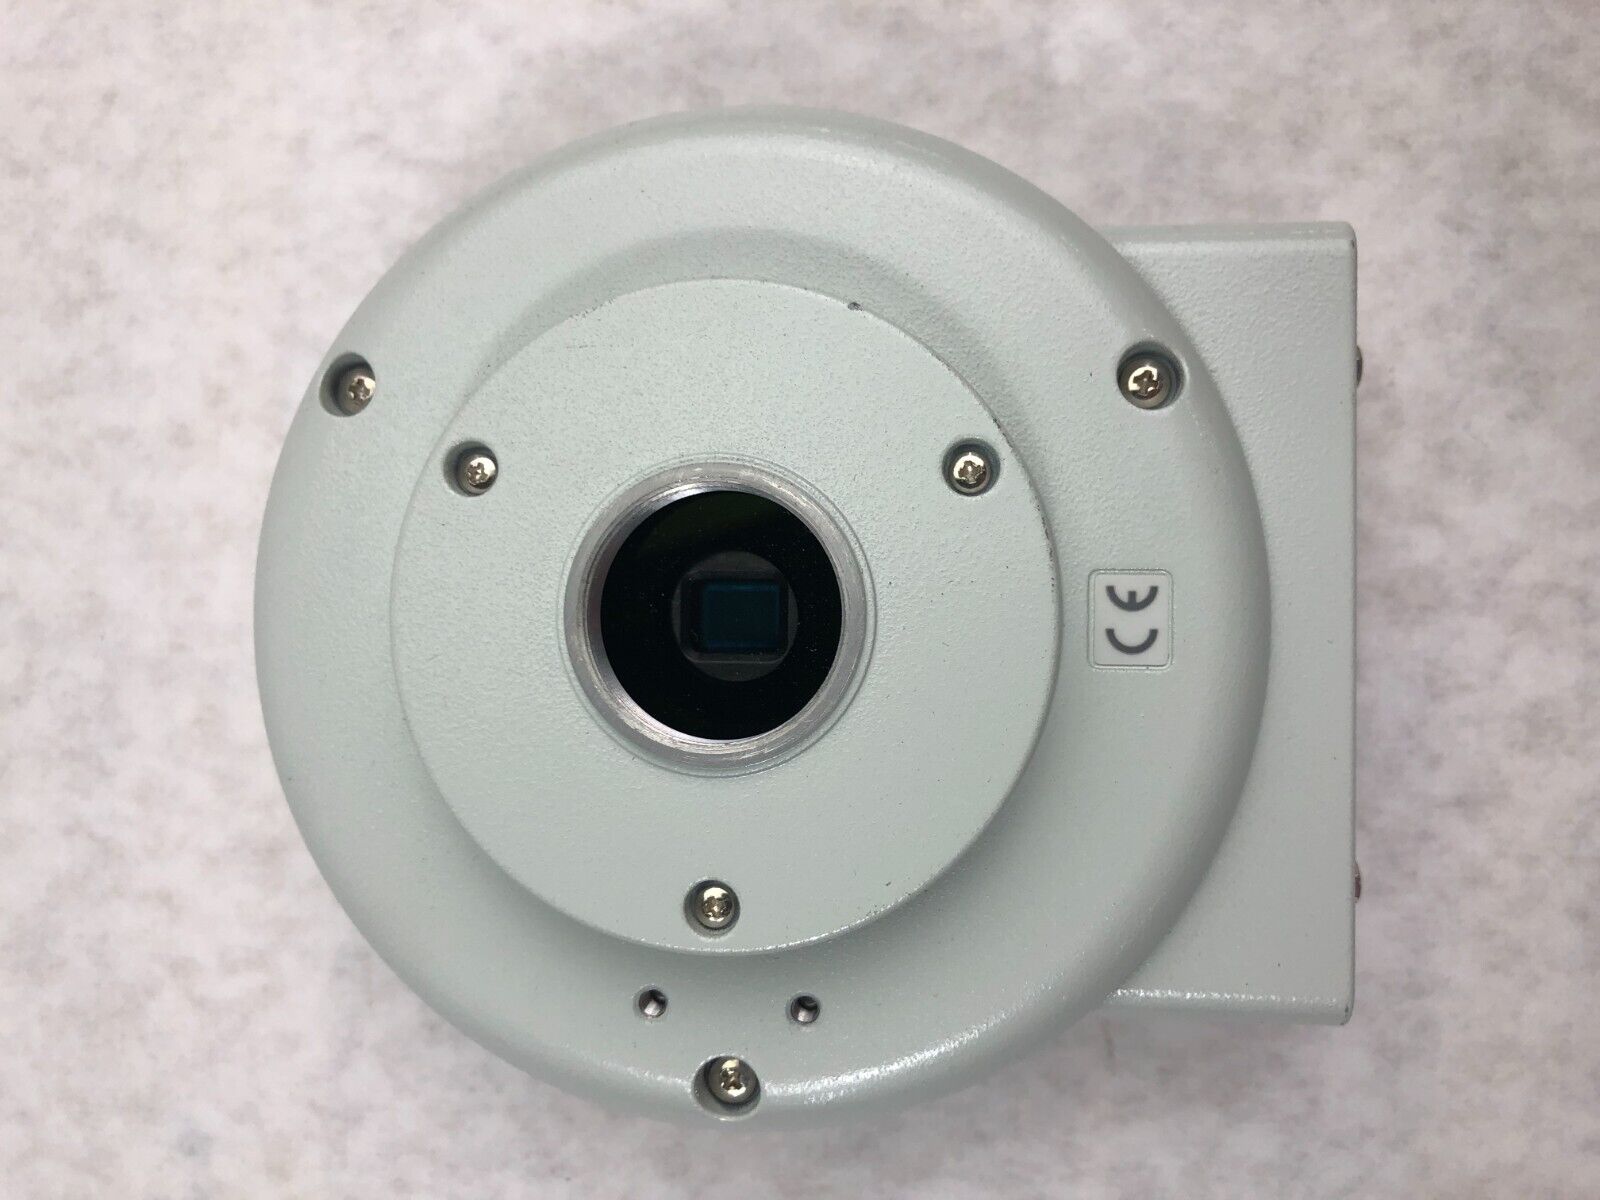 Olympus DP-12 Microscope Camera - No Controller